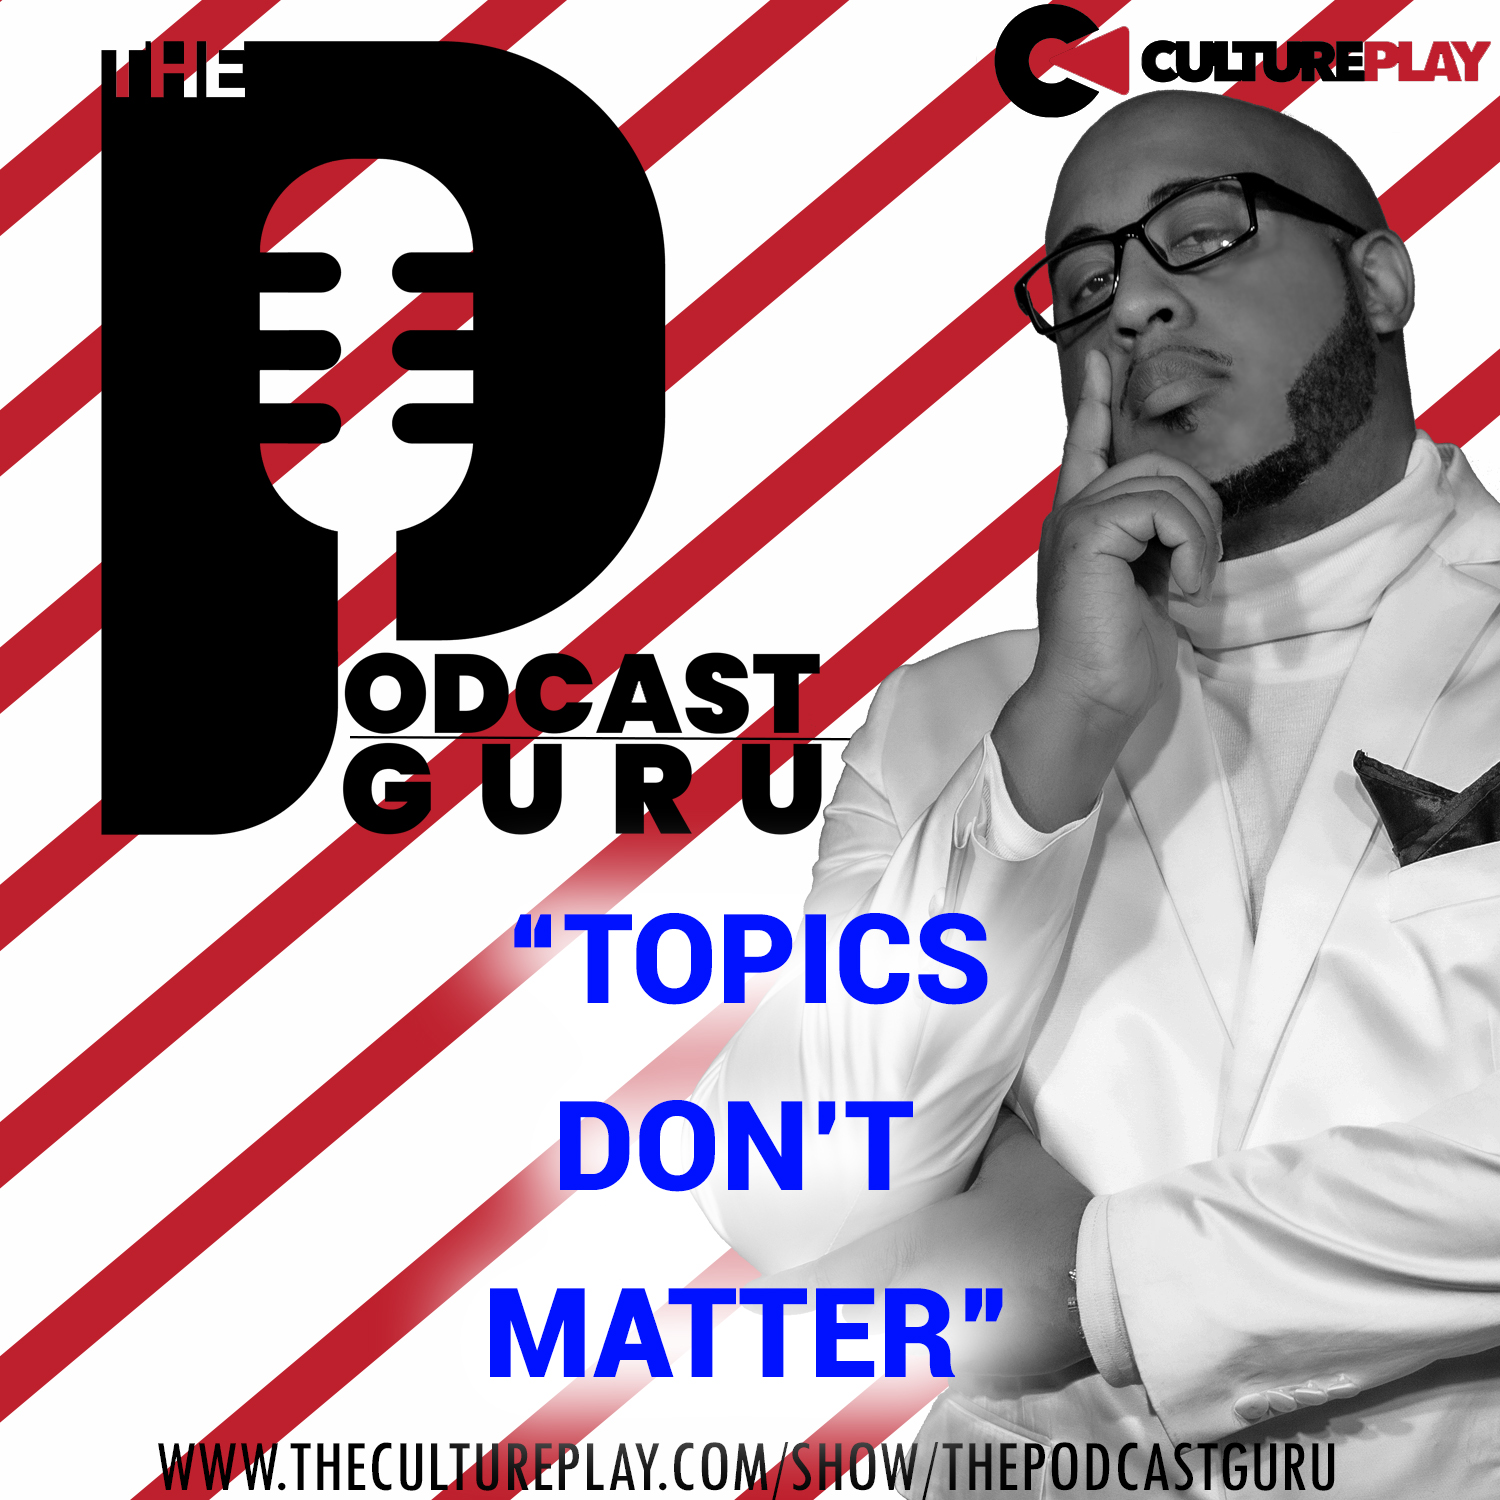 Podcast Guru - Topics Don't Matter